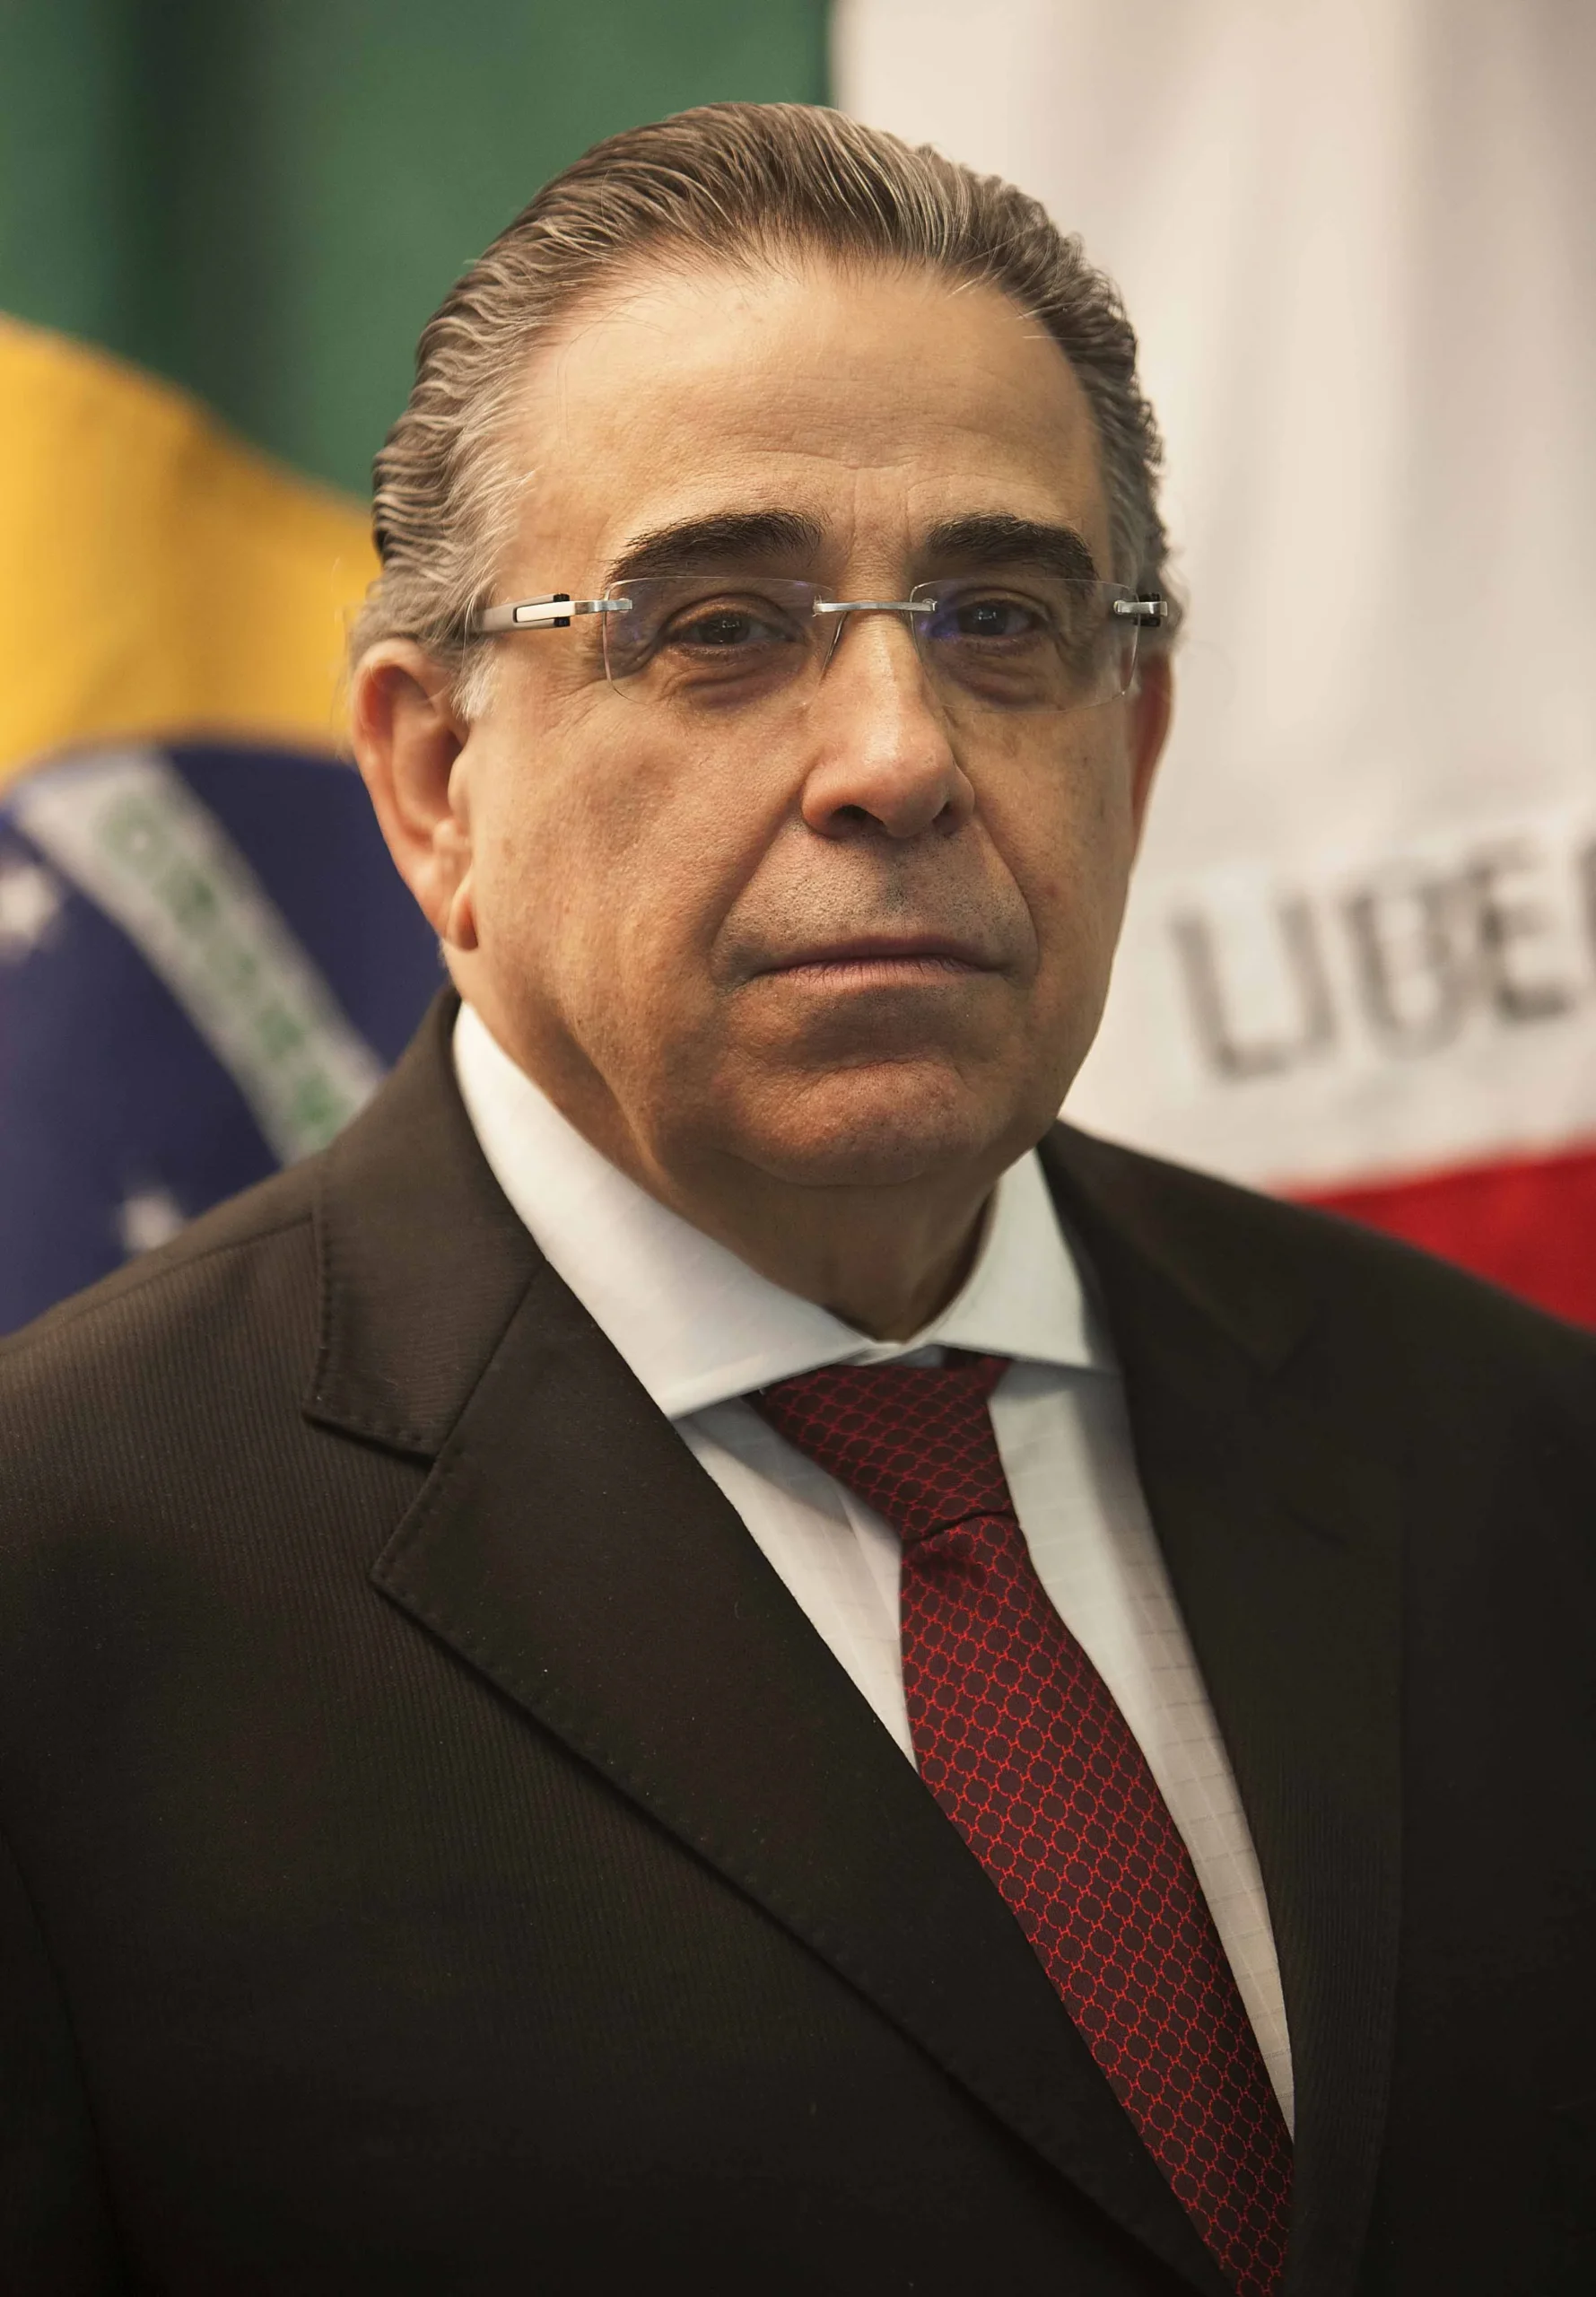 Alberto Pinto Coelho